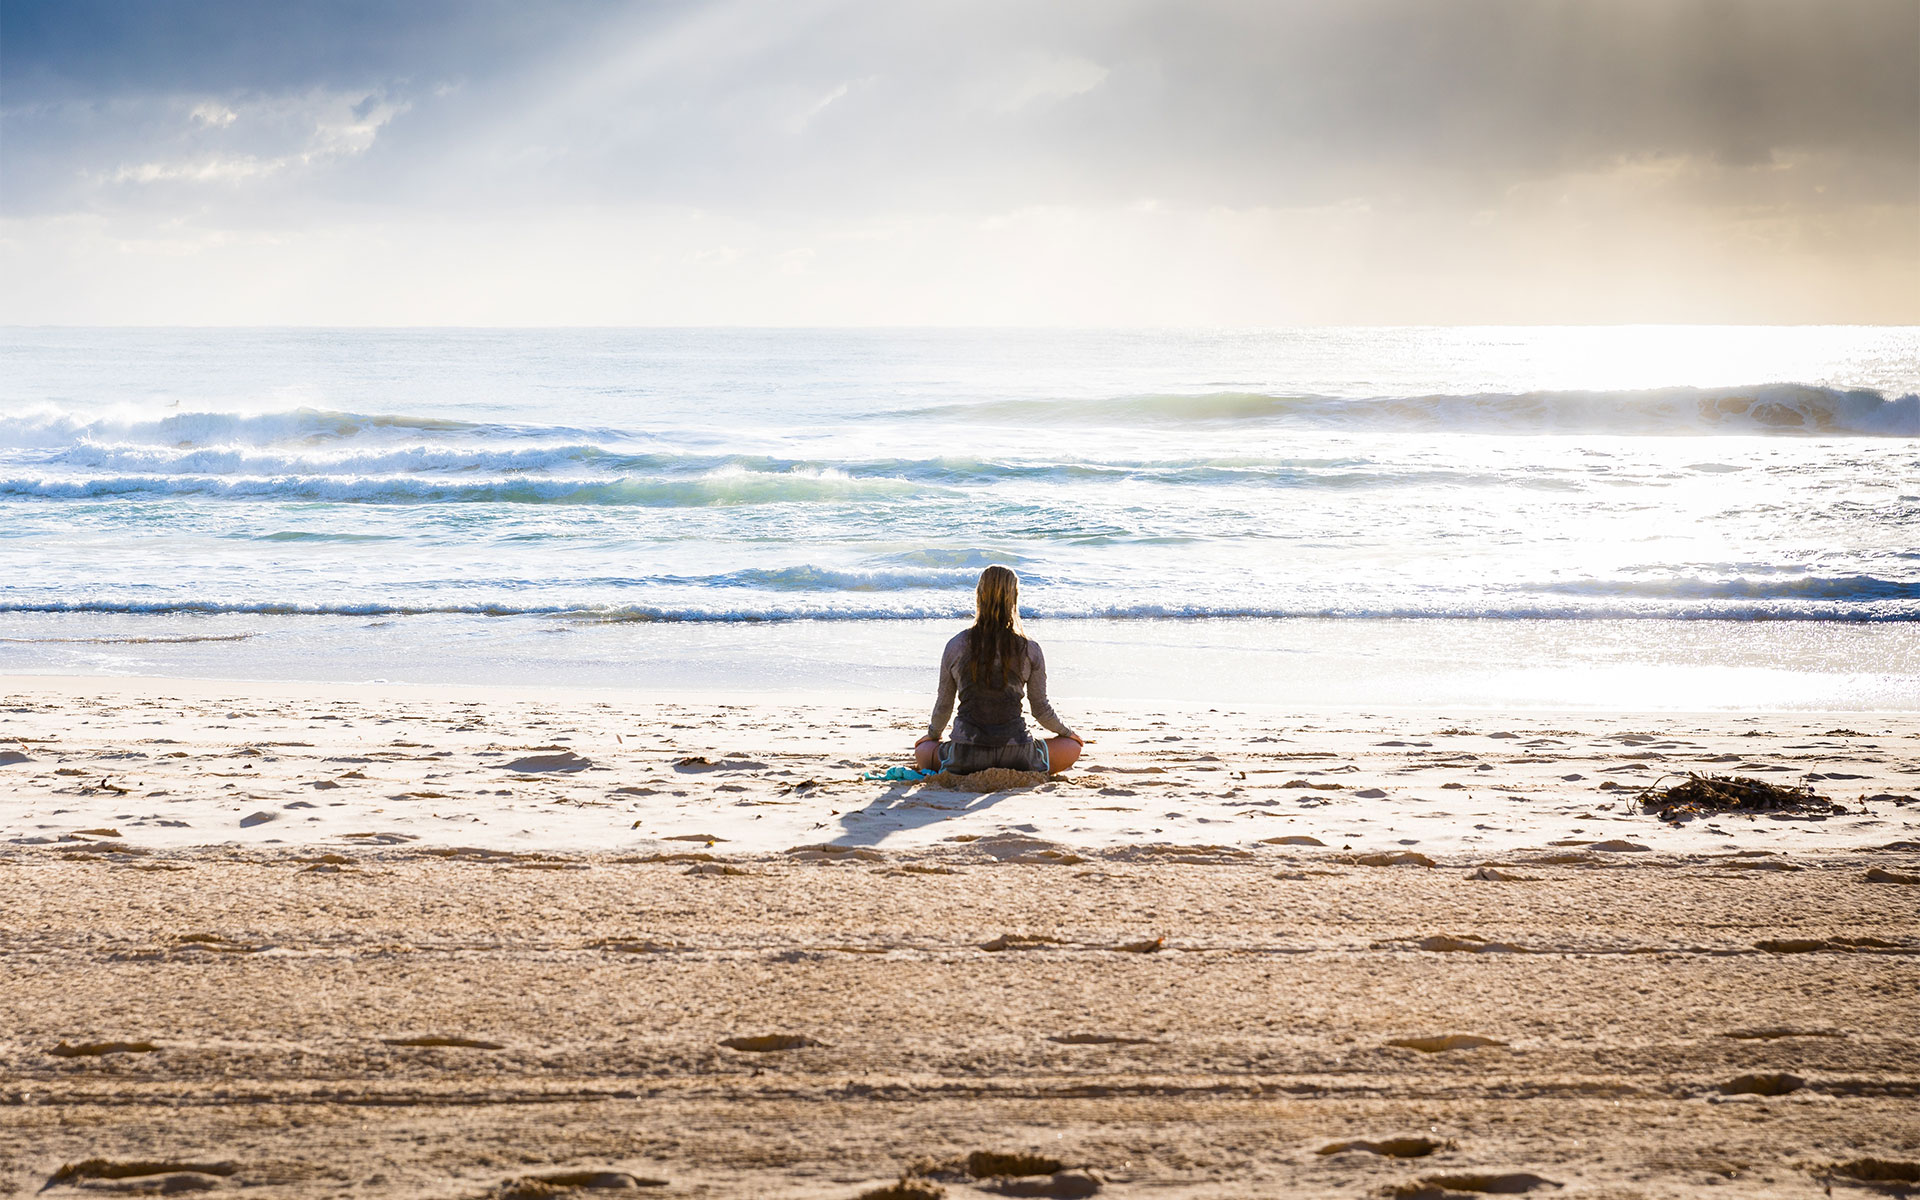 woman meditating on beach